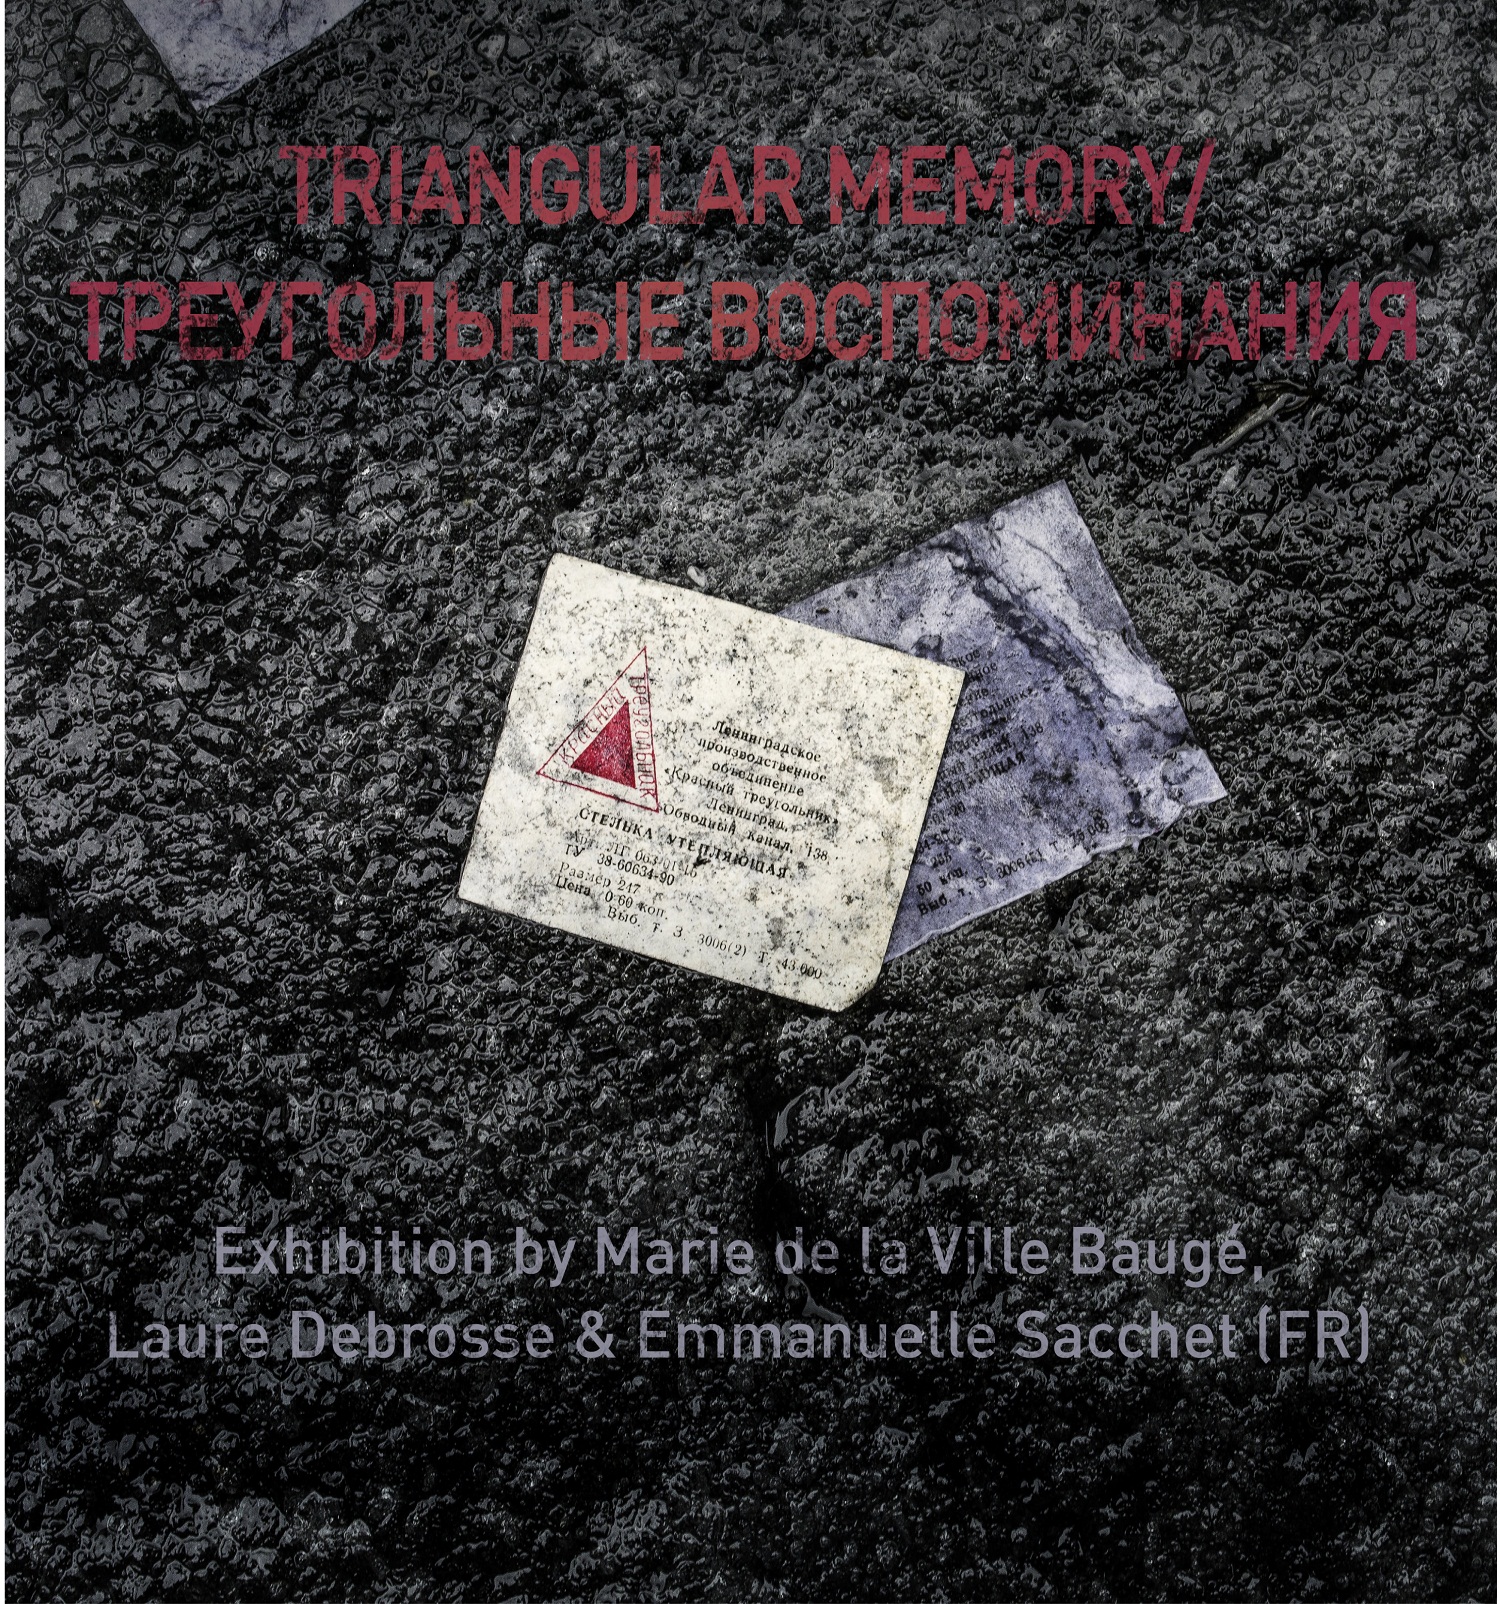 Exhibition “Triangular memories”